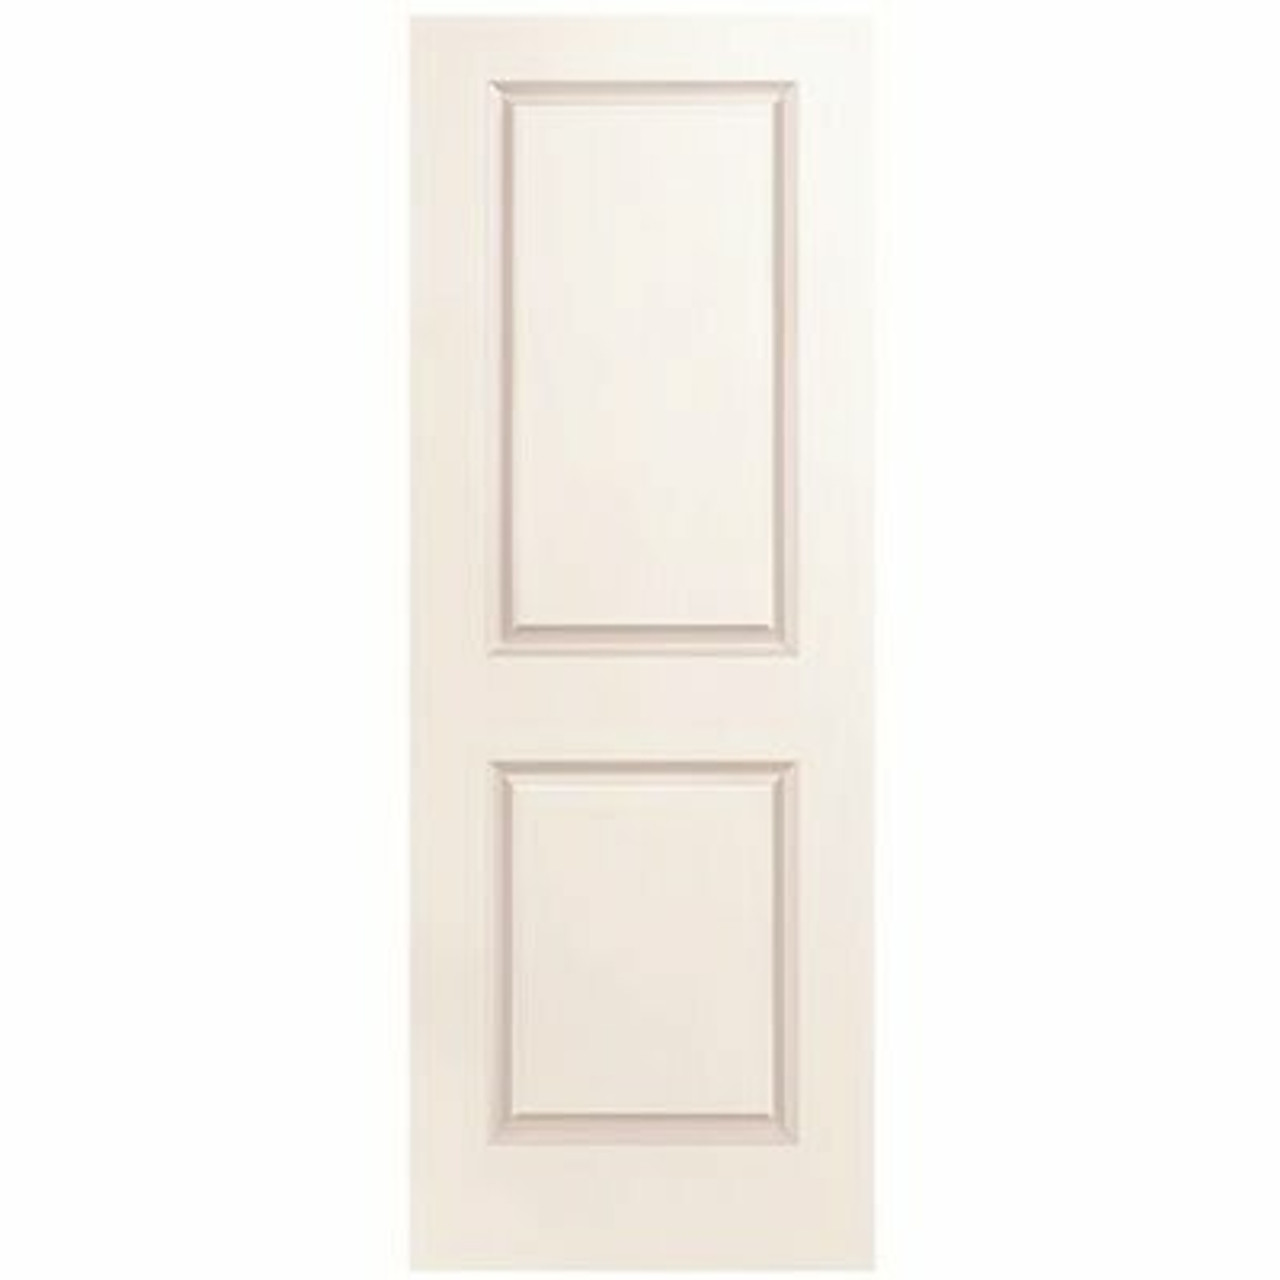 Masonite 36 In. X 80 In. Smooth 2-Panel Square Primed White Hollow Core Composite Interior Door Slab